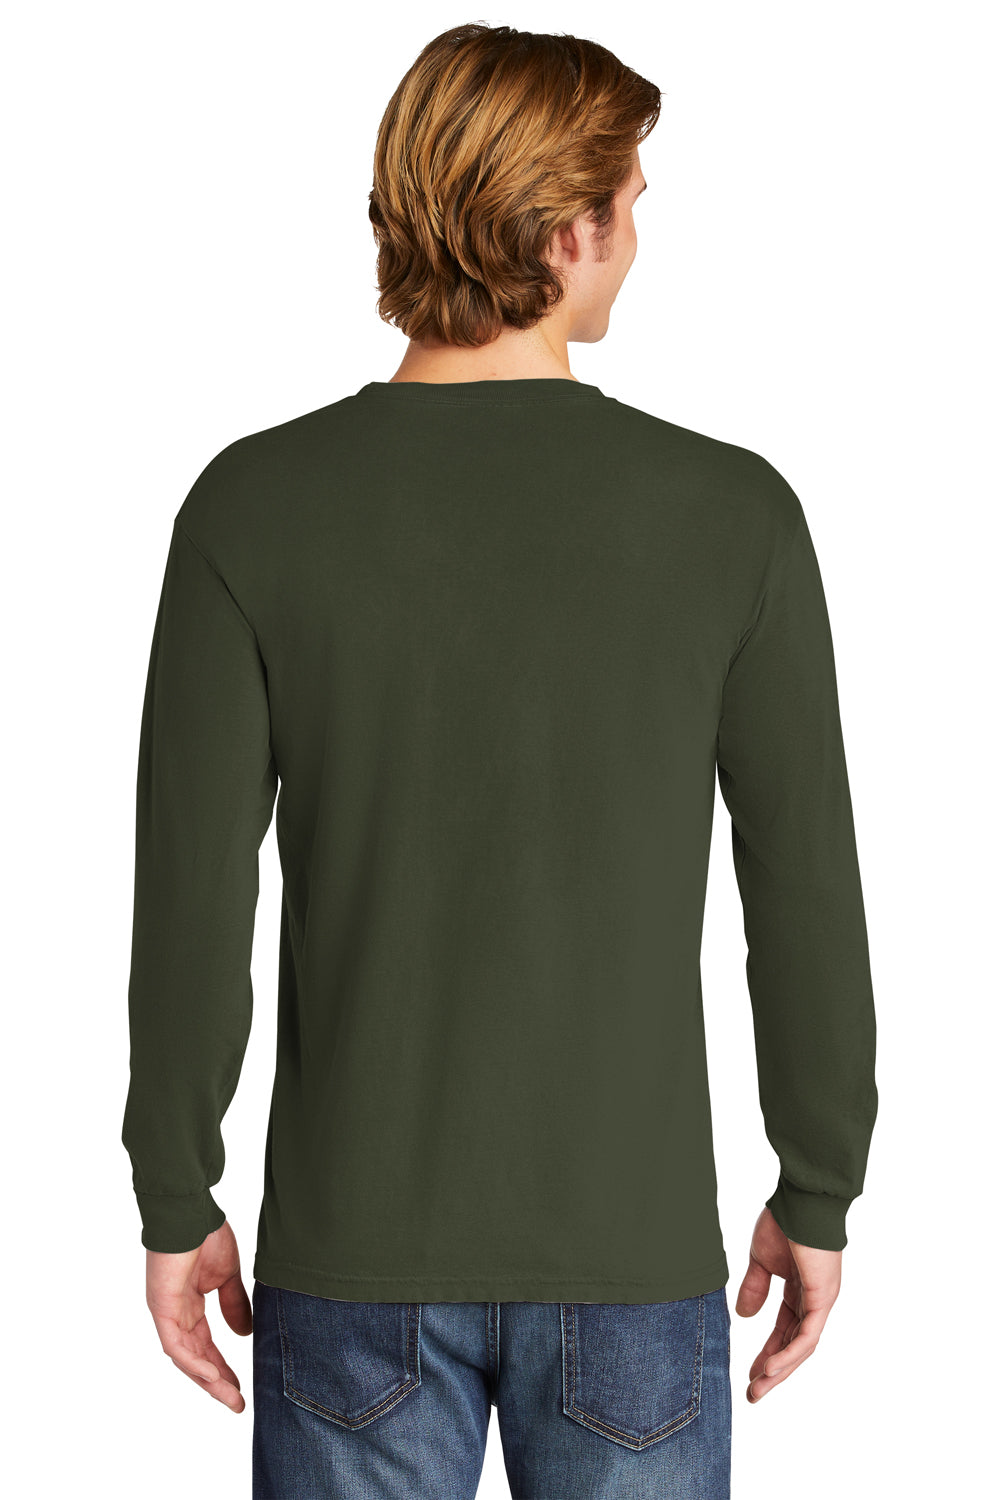 Comfort Colors 6014/C6014 Mens Long Sleeve Crewneck T-Shirt Hemp Green Back